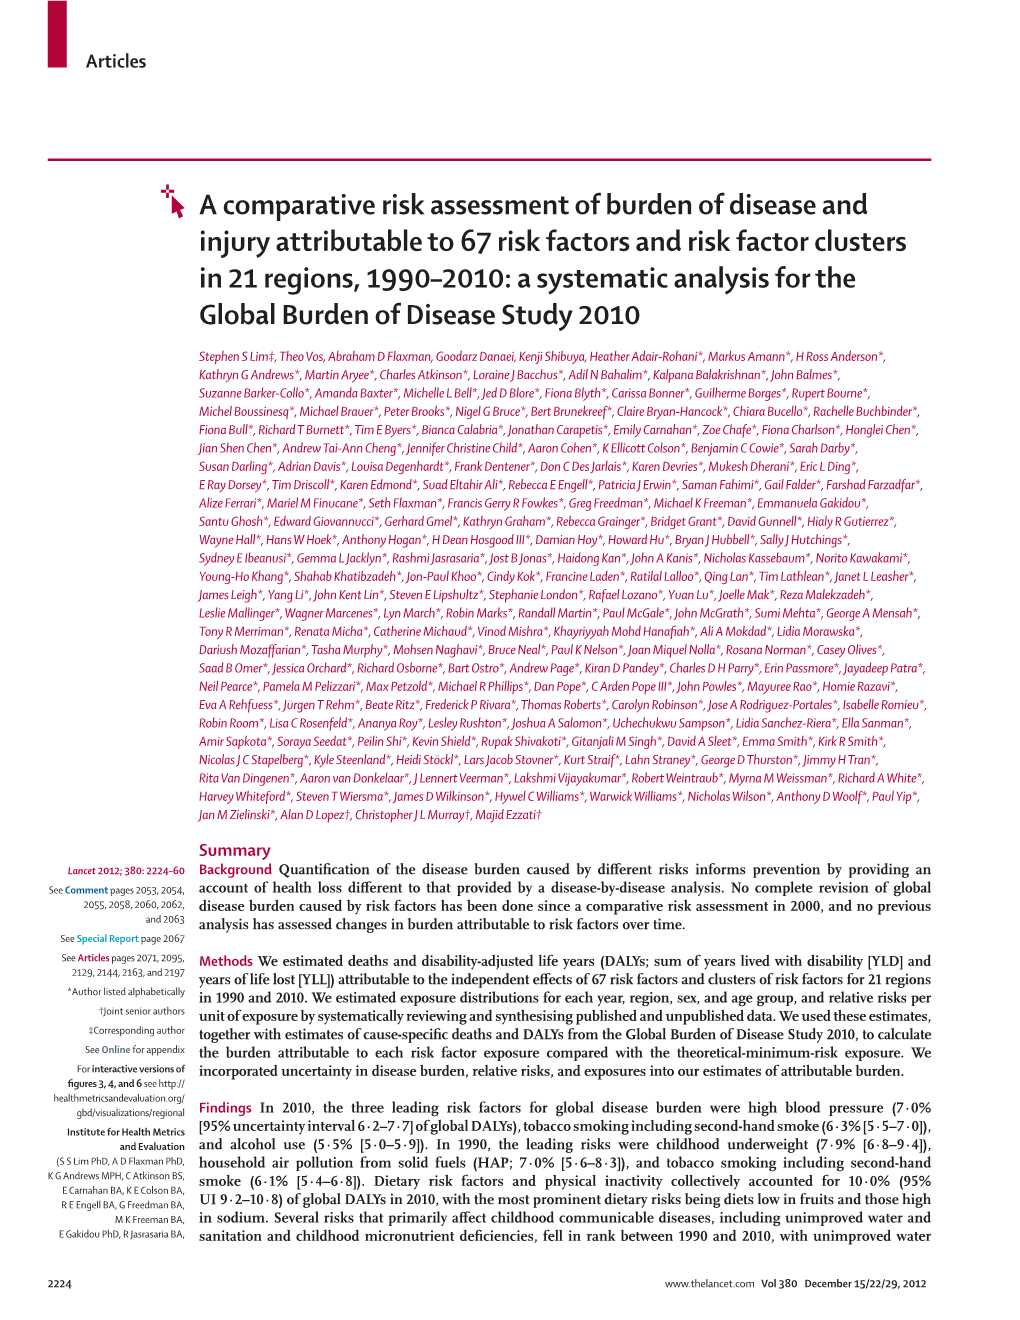 Access Pdf of Lancet Paper on Global Burden of Disease Here